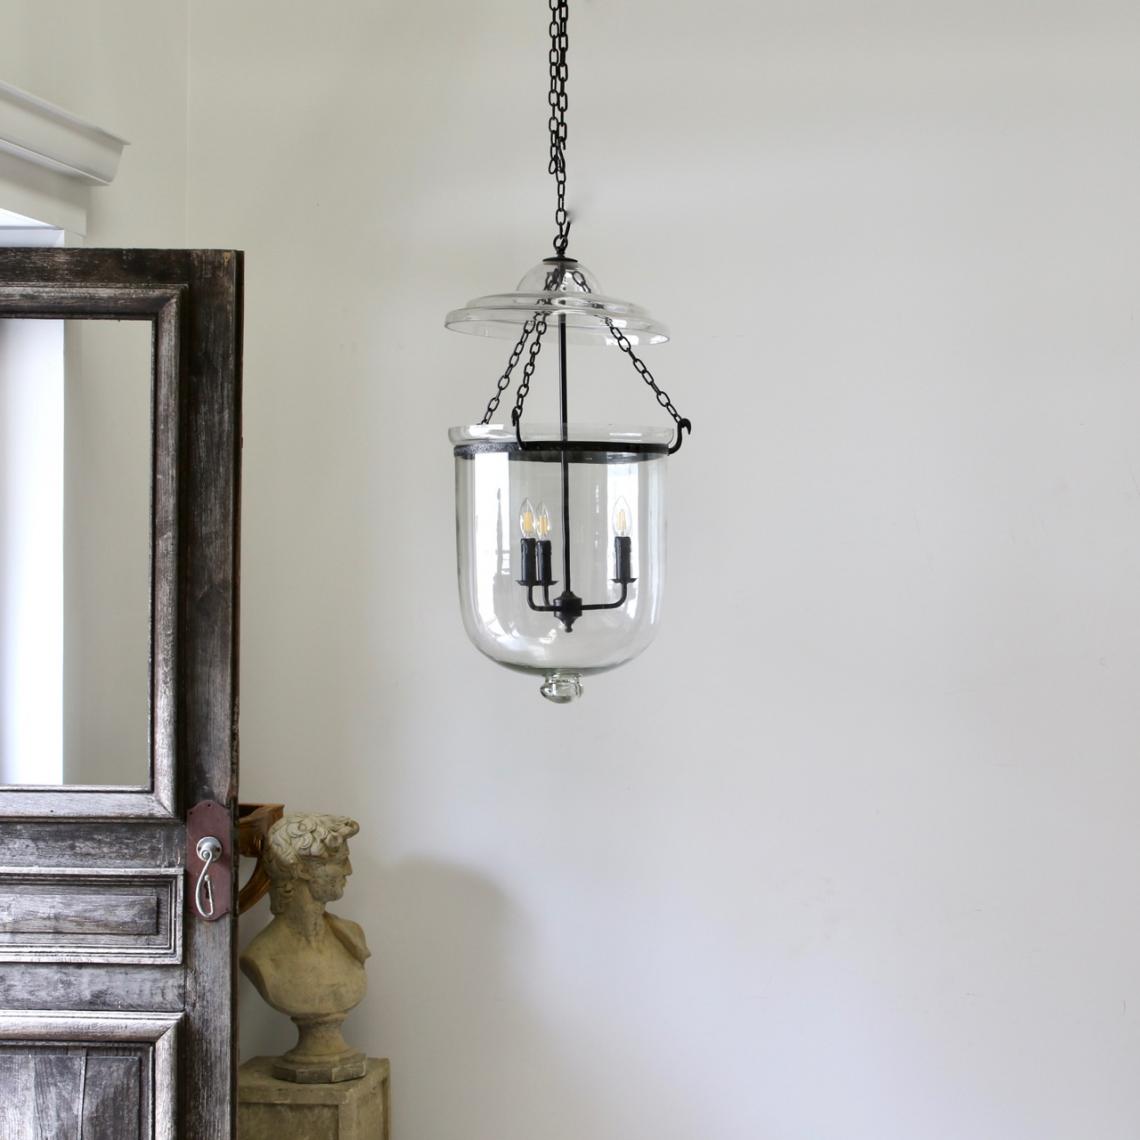 117-25 - Bell Jar Lantern